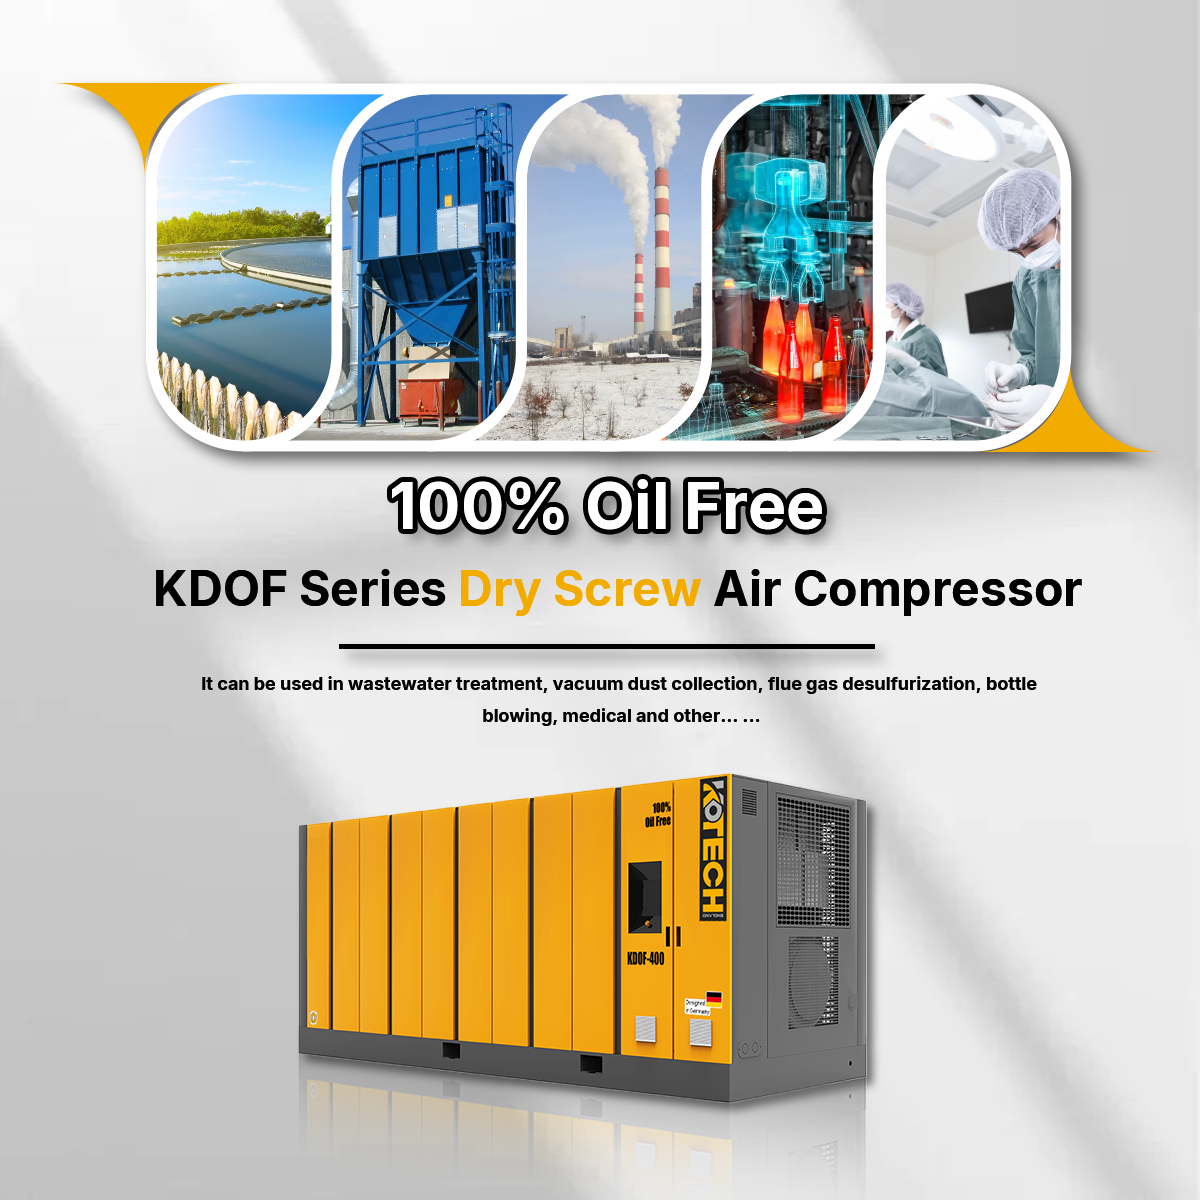 KDOF Series Dry Screw Air Compressor applications